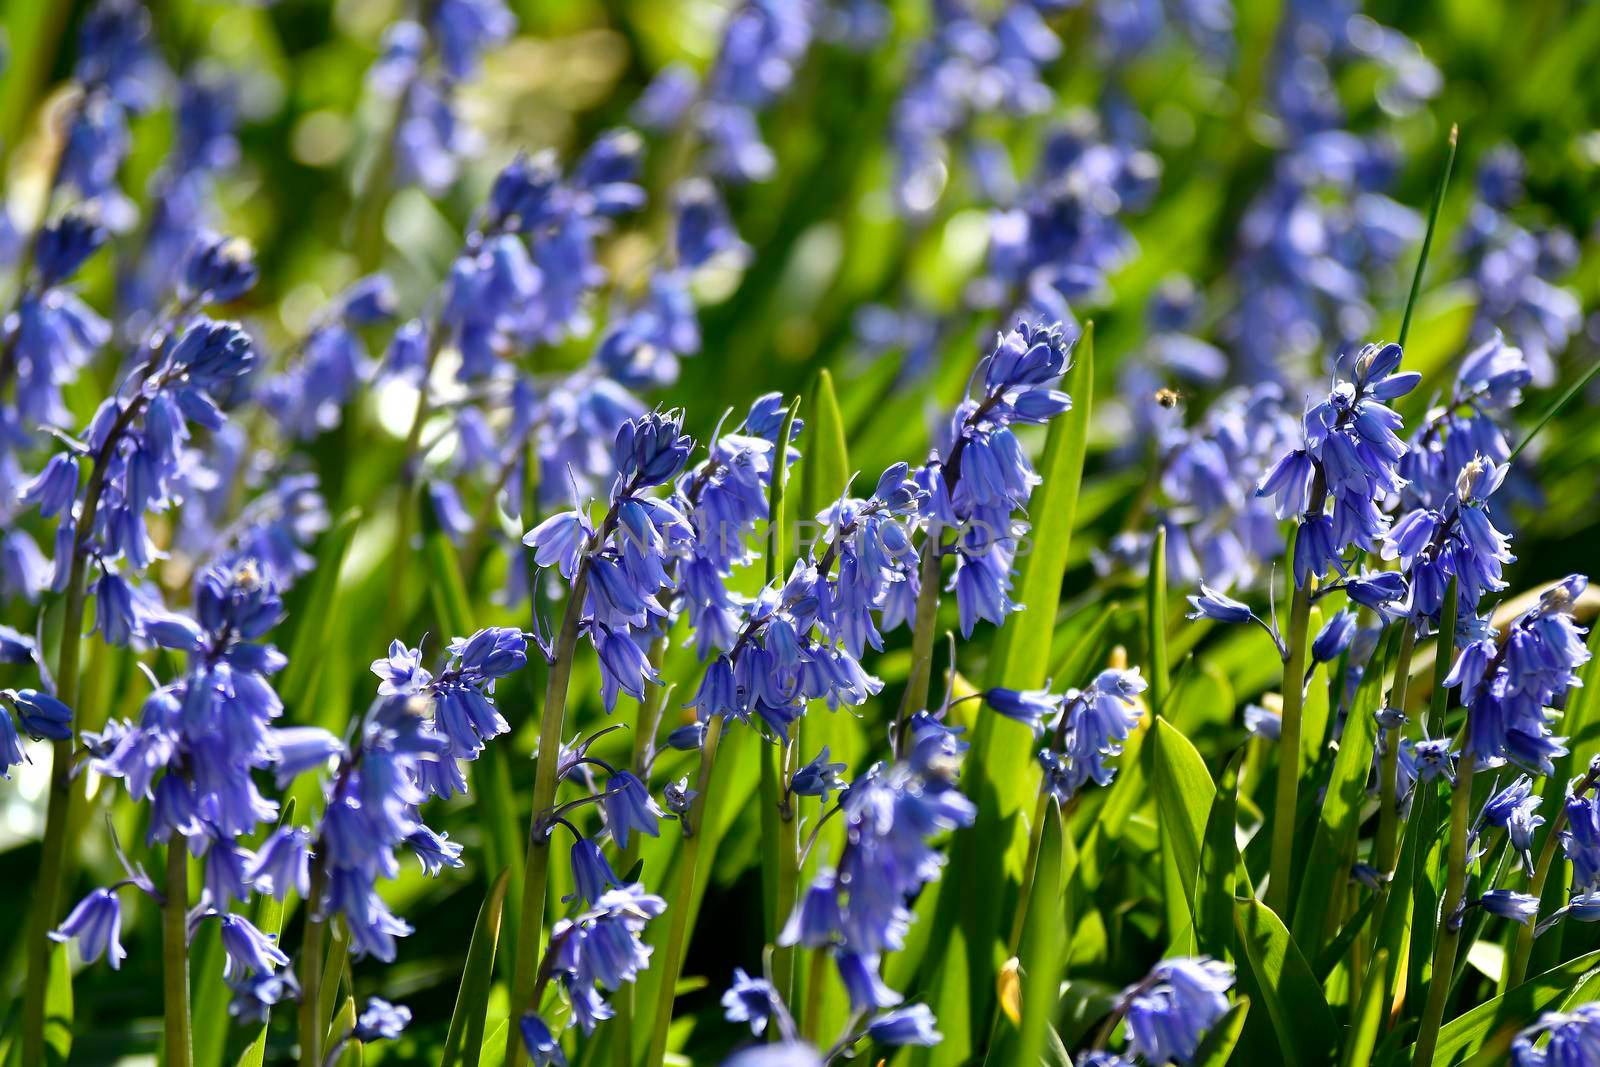 Bluebells with flowers in a German garden in spring by Jochen